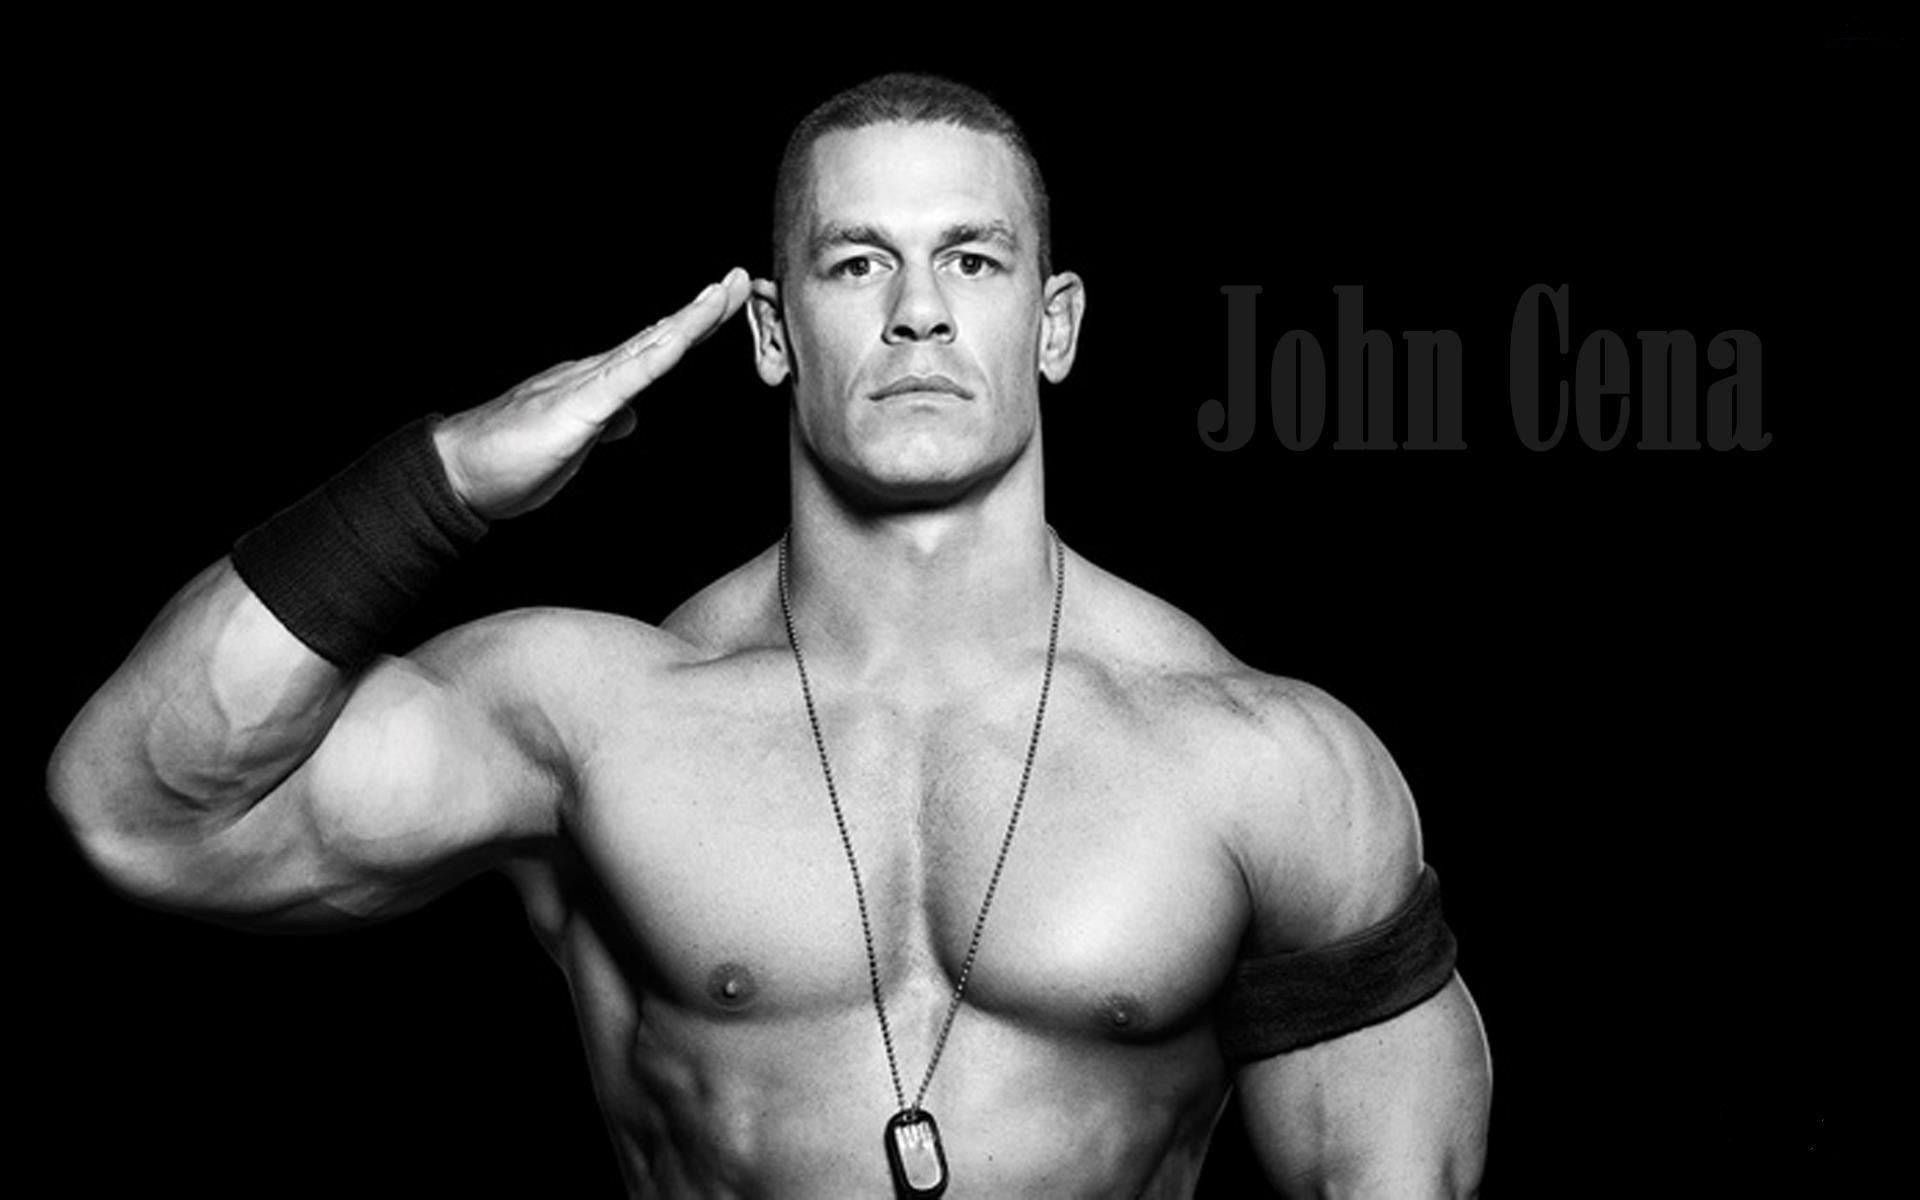 John Cena Wallpaper HD download latest John Cena